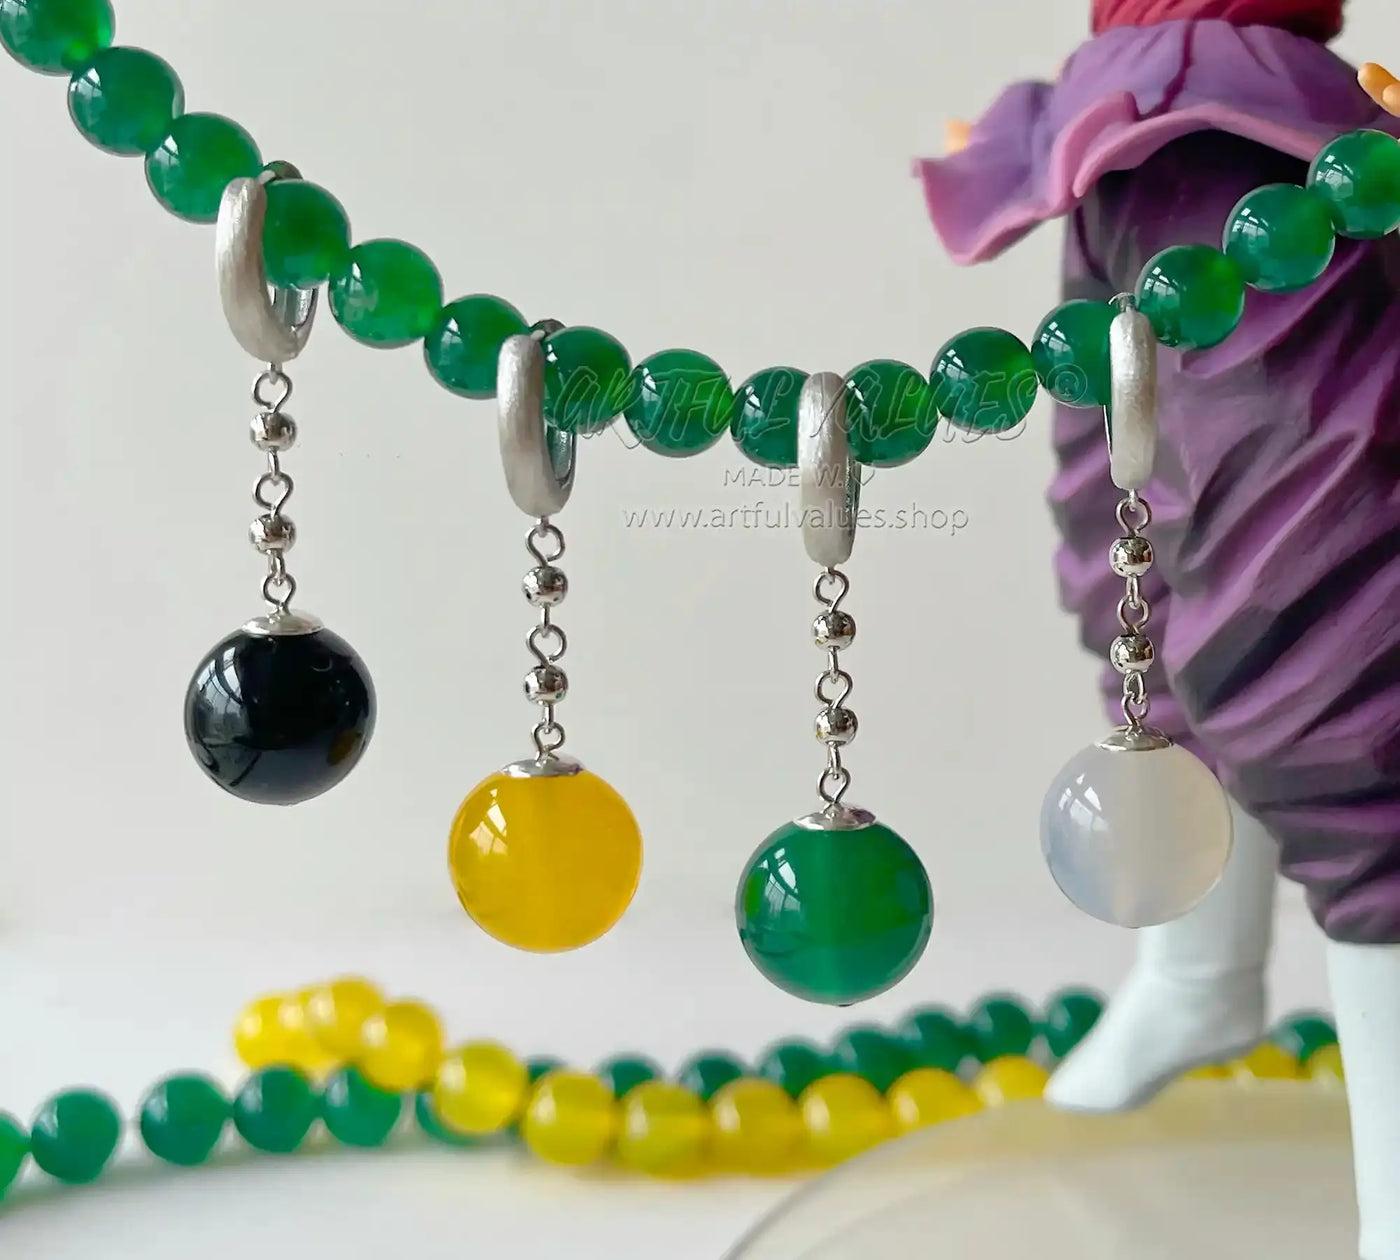 Anime Cosplay Earring Potara Earring Yellow Beads Green Beads